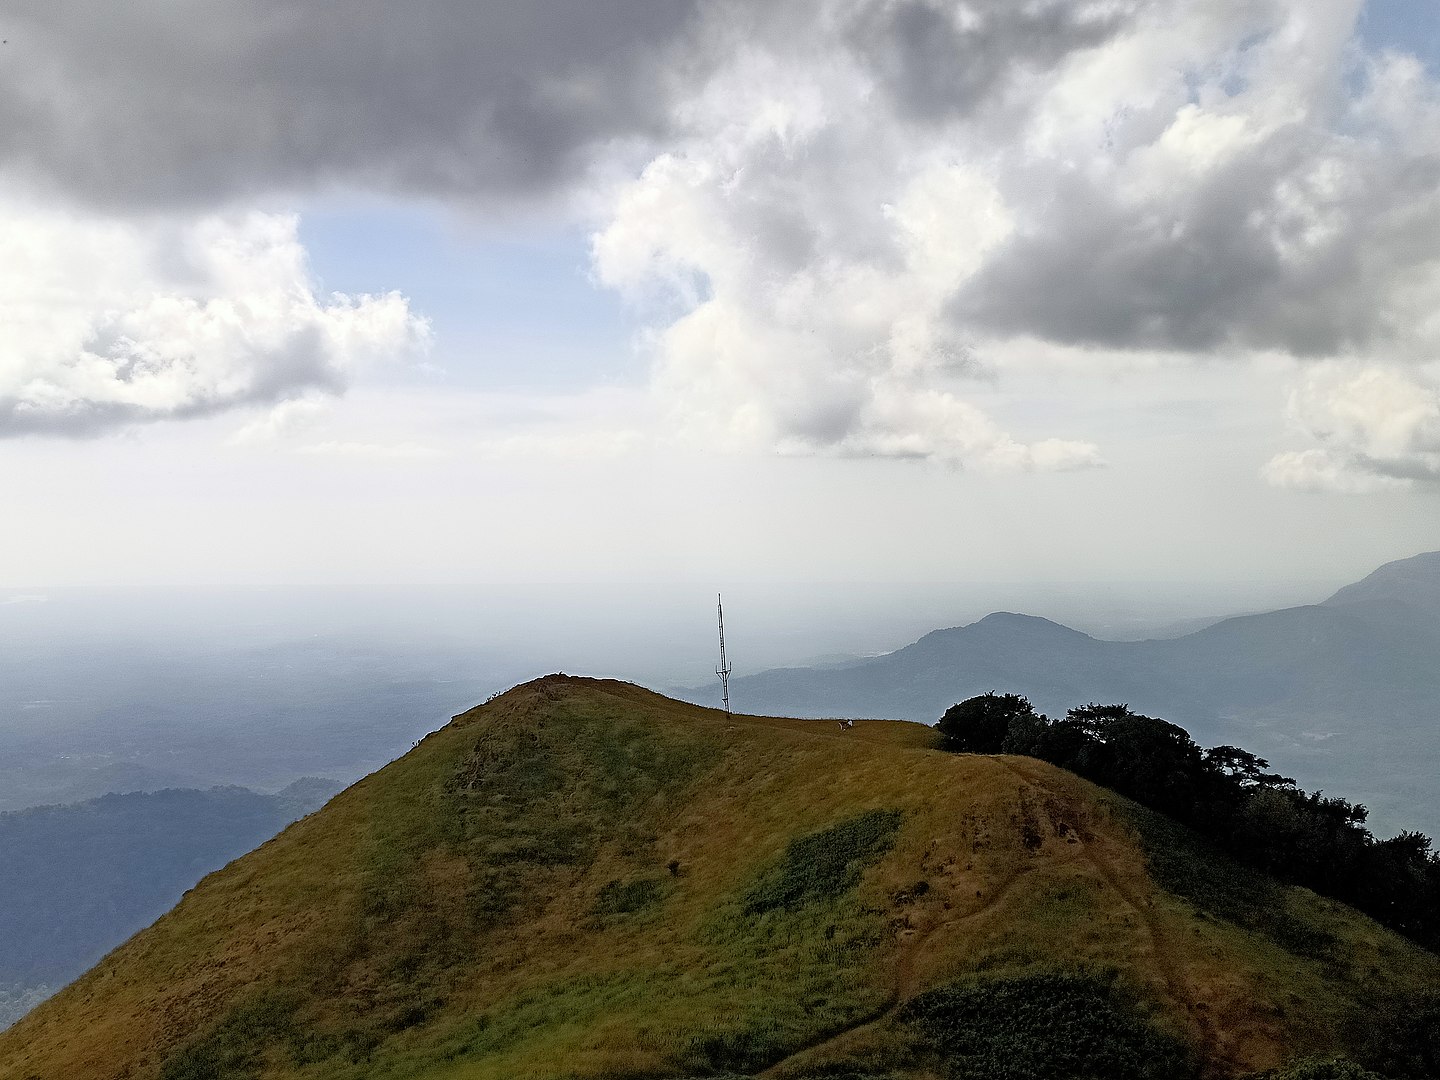 Kodachadri Hills